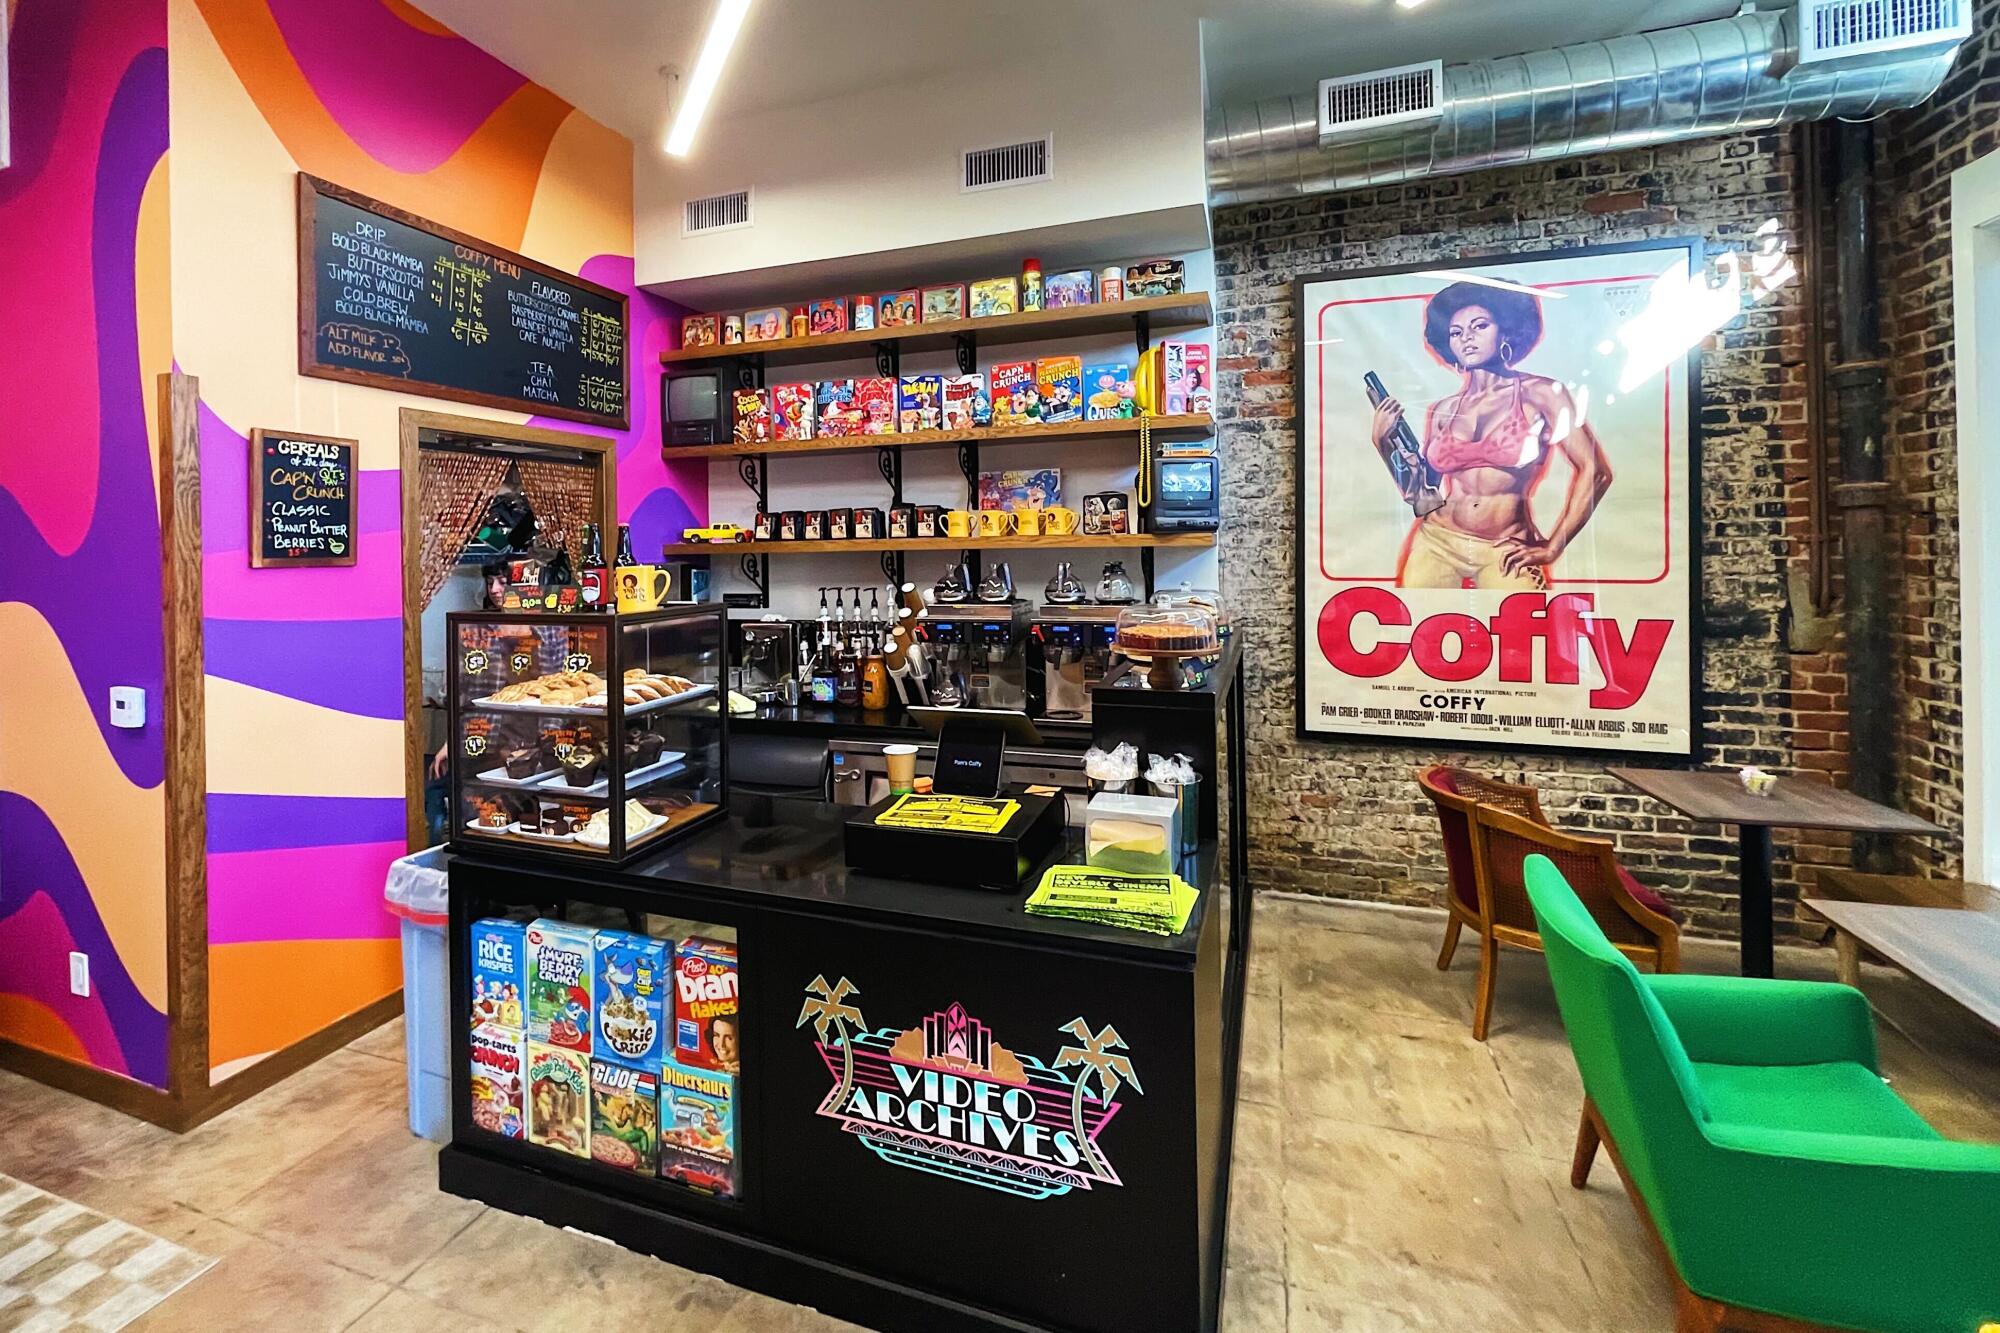 Inside Quentin Tarantino's Vista Theater cafe Pam's Coffy - Los